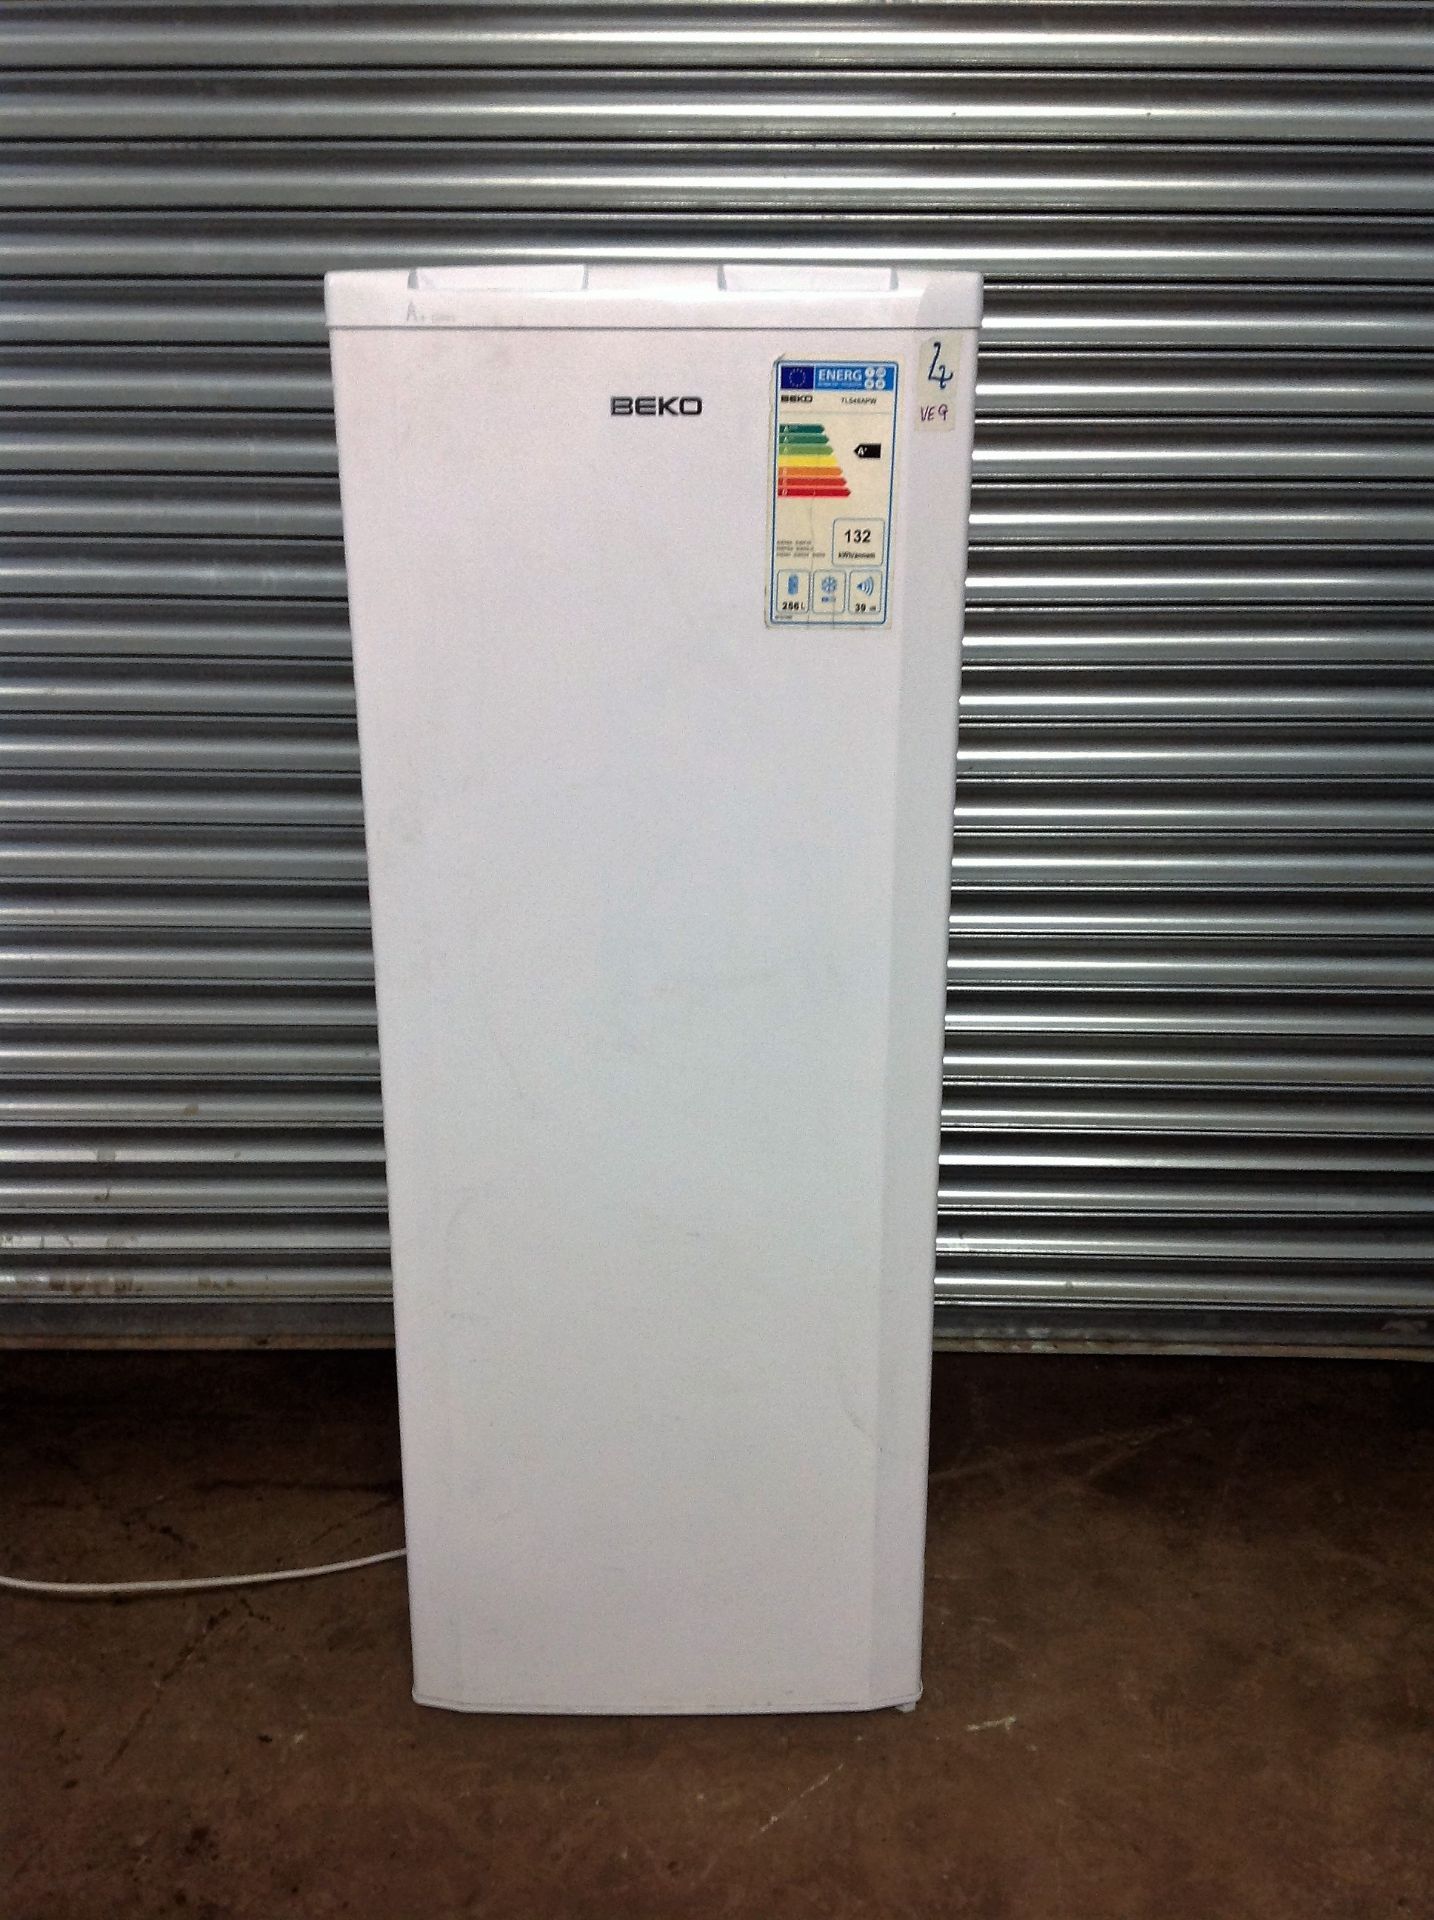 Beko Domestic White Refrigerator -Model: L54261 / B270U - H: 145cm W: 55cm D: 54cm